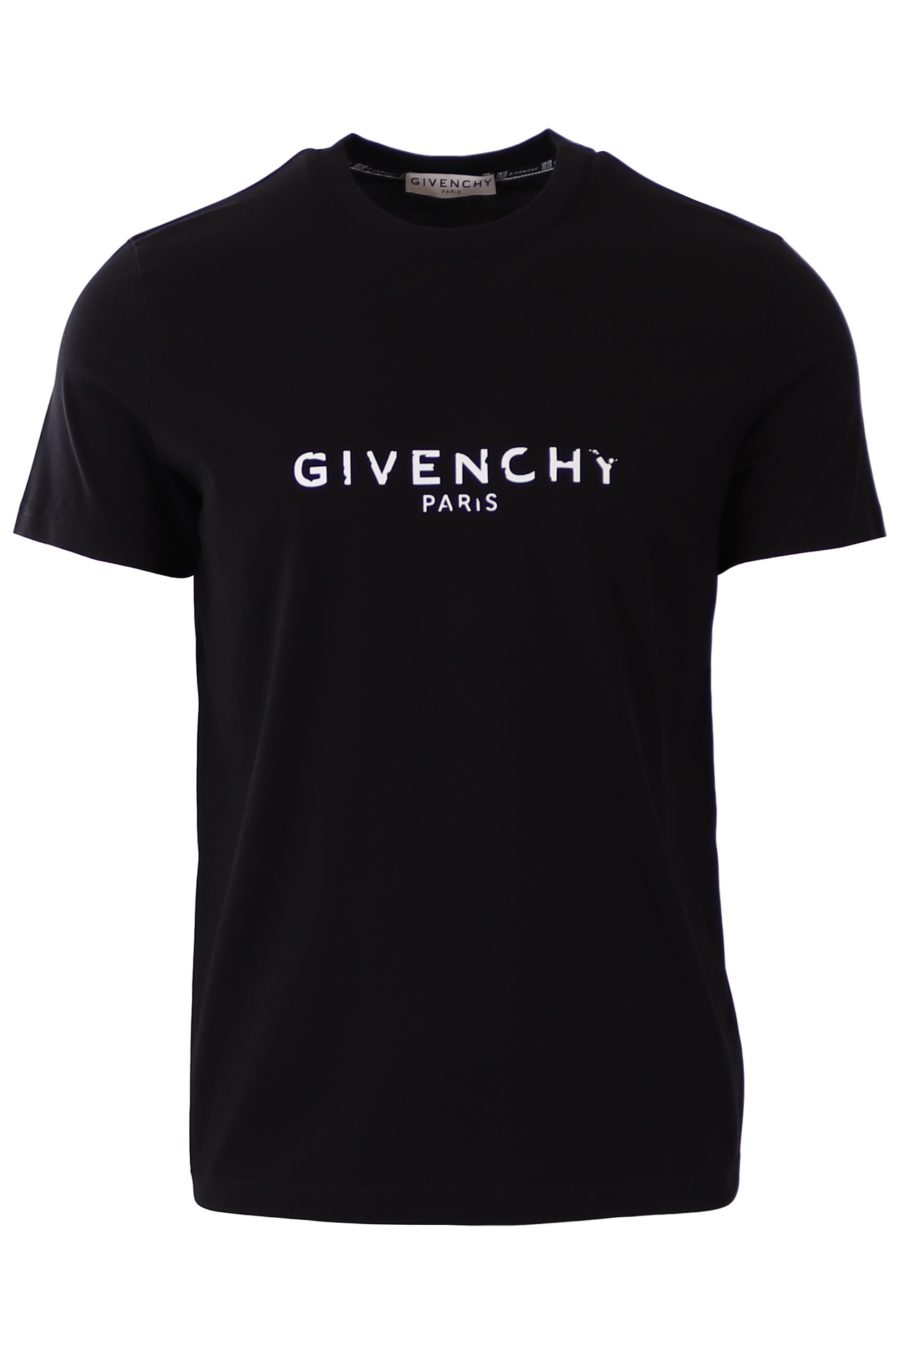 Givenchy Paris - T-shirt slim noir - 75b20a6c0b19f1ac411df0cae6c02b08ce7f778d